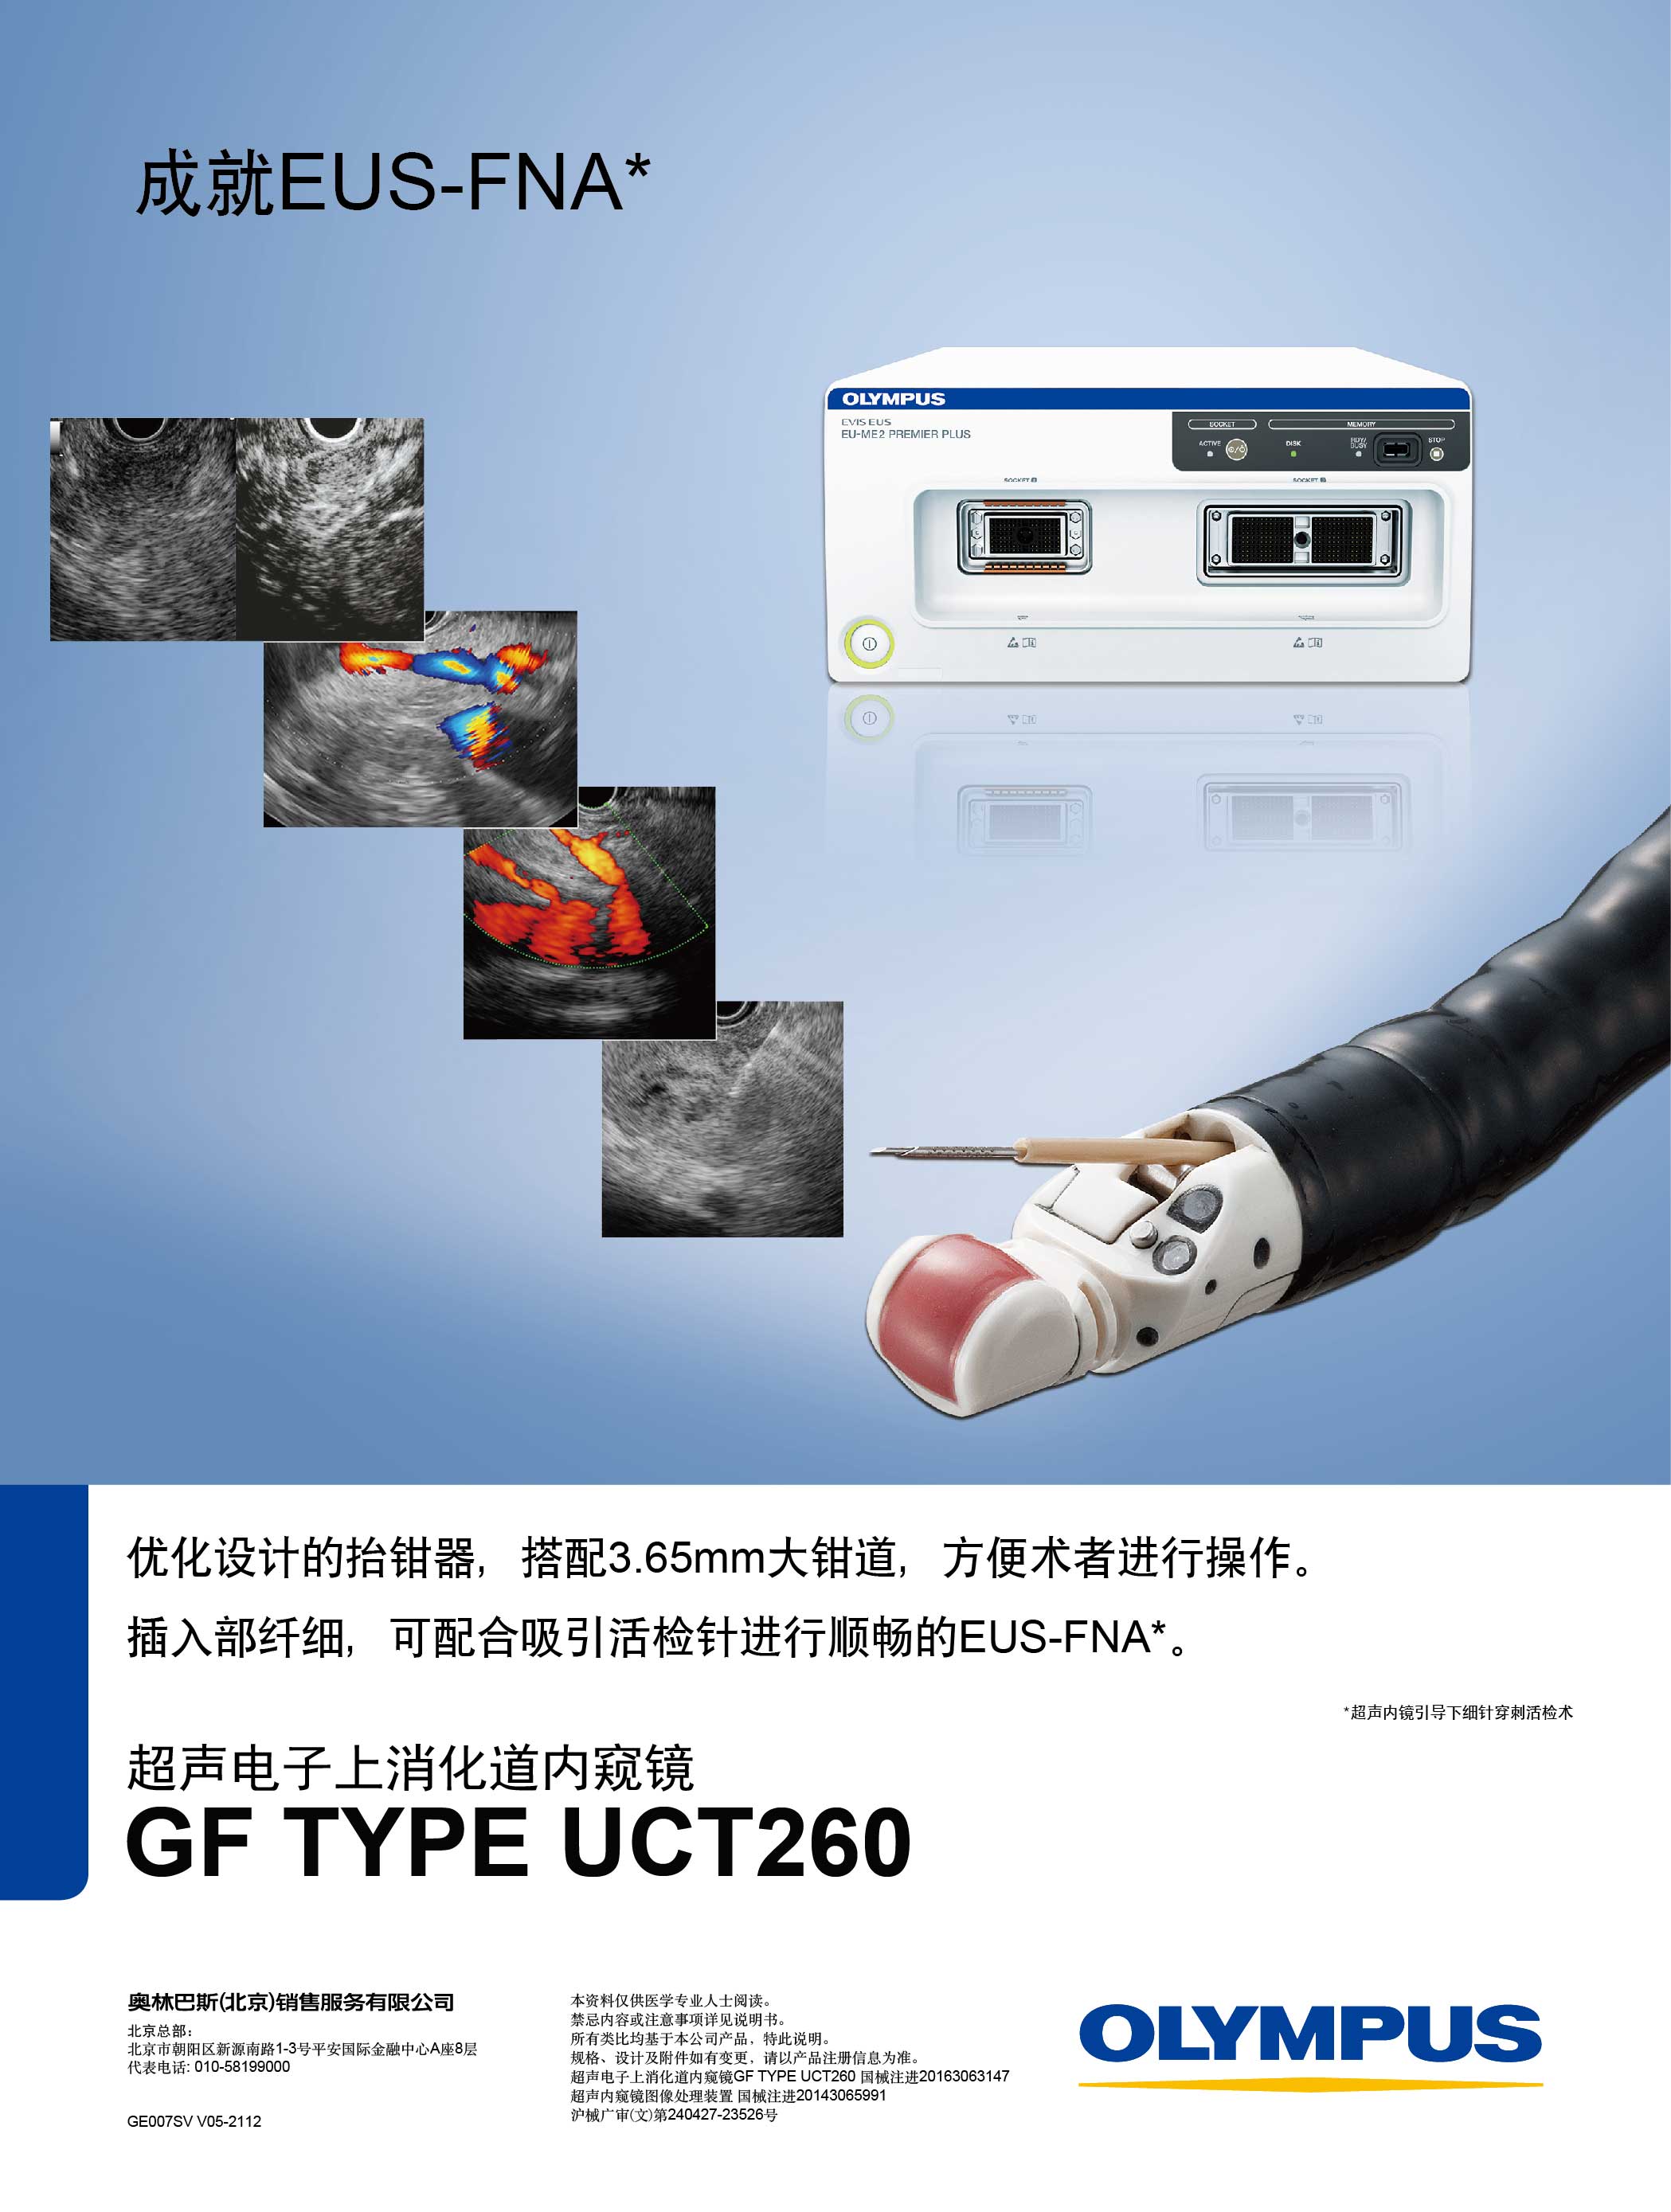 GF-UCT260.jpg